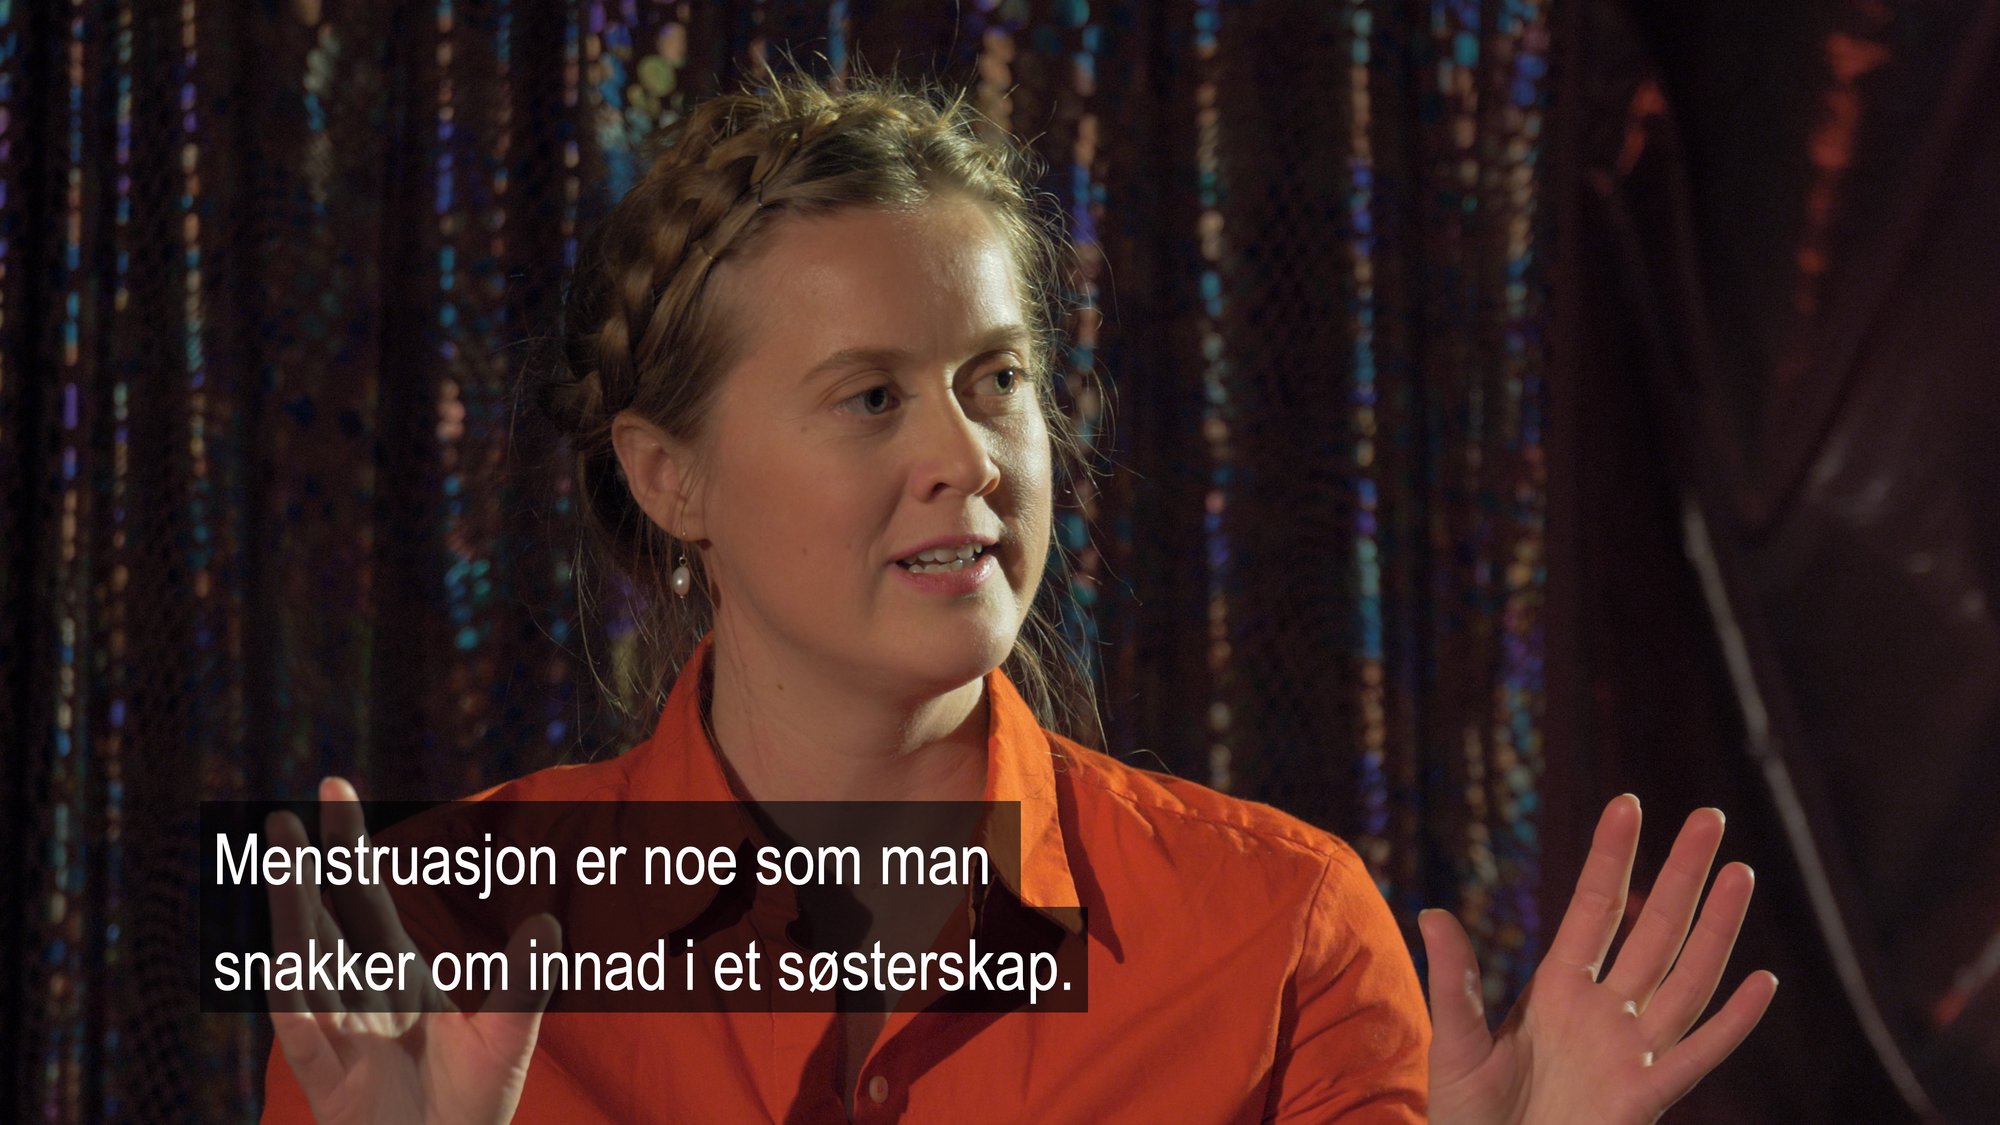 Ane Barstad Solvang in "Talkshow" a film about menstruation (2020).